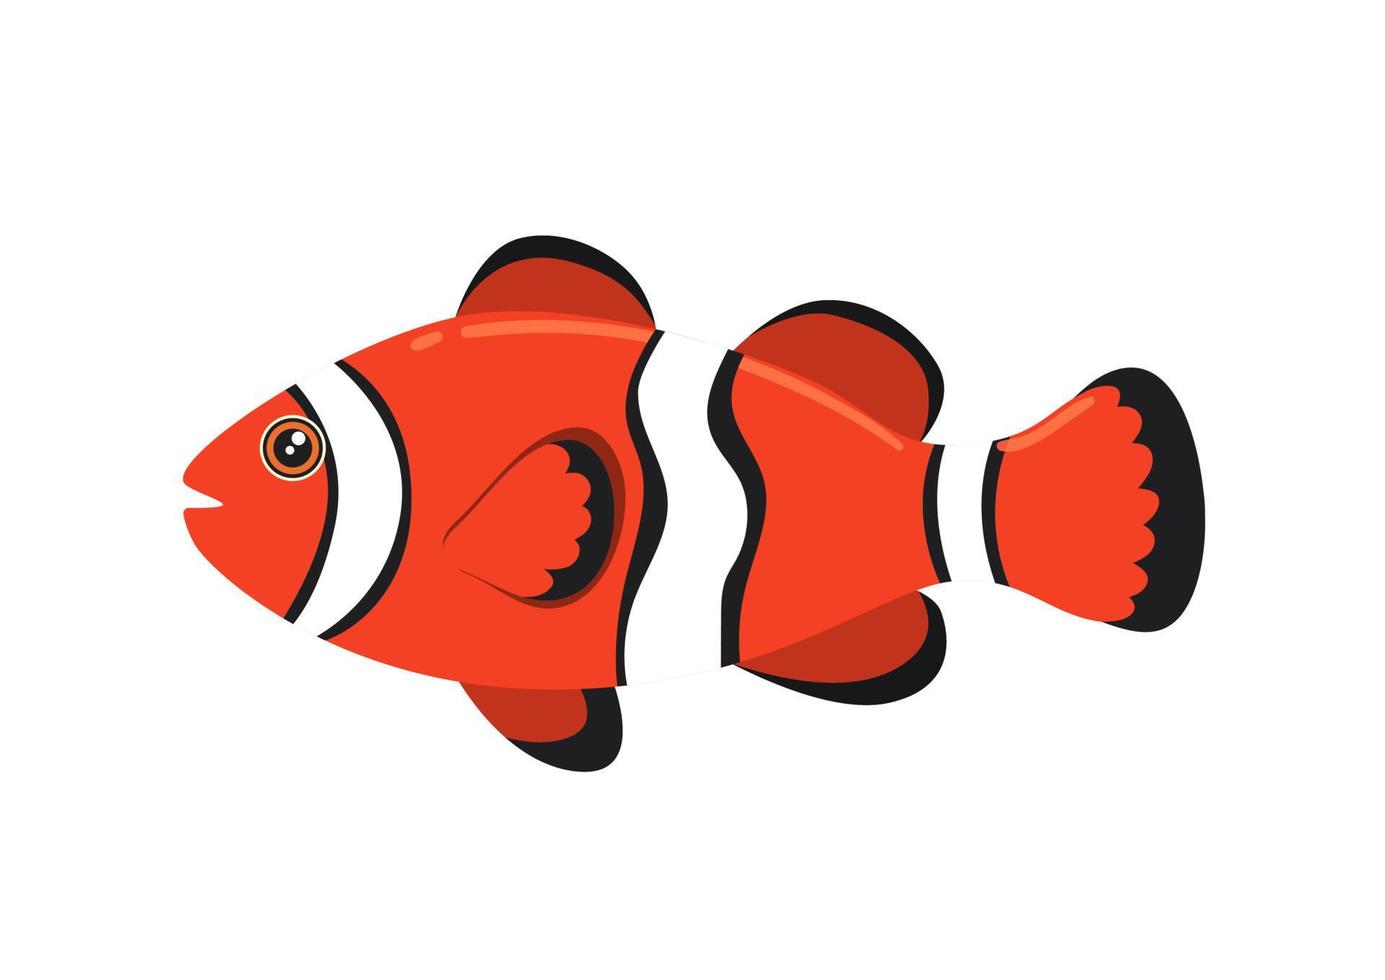 tecknad orange fisk i platt stil. vektor illustration av havsfisk isolerad på vit bakgrund